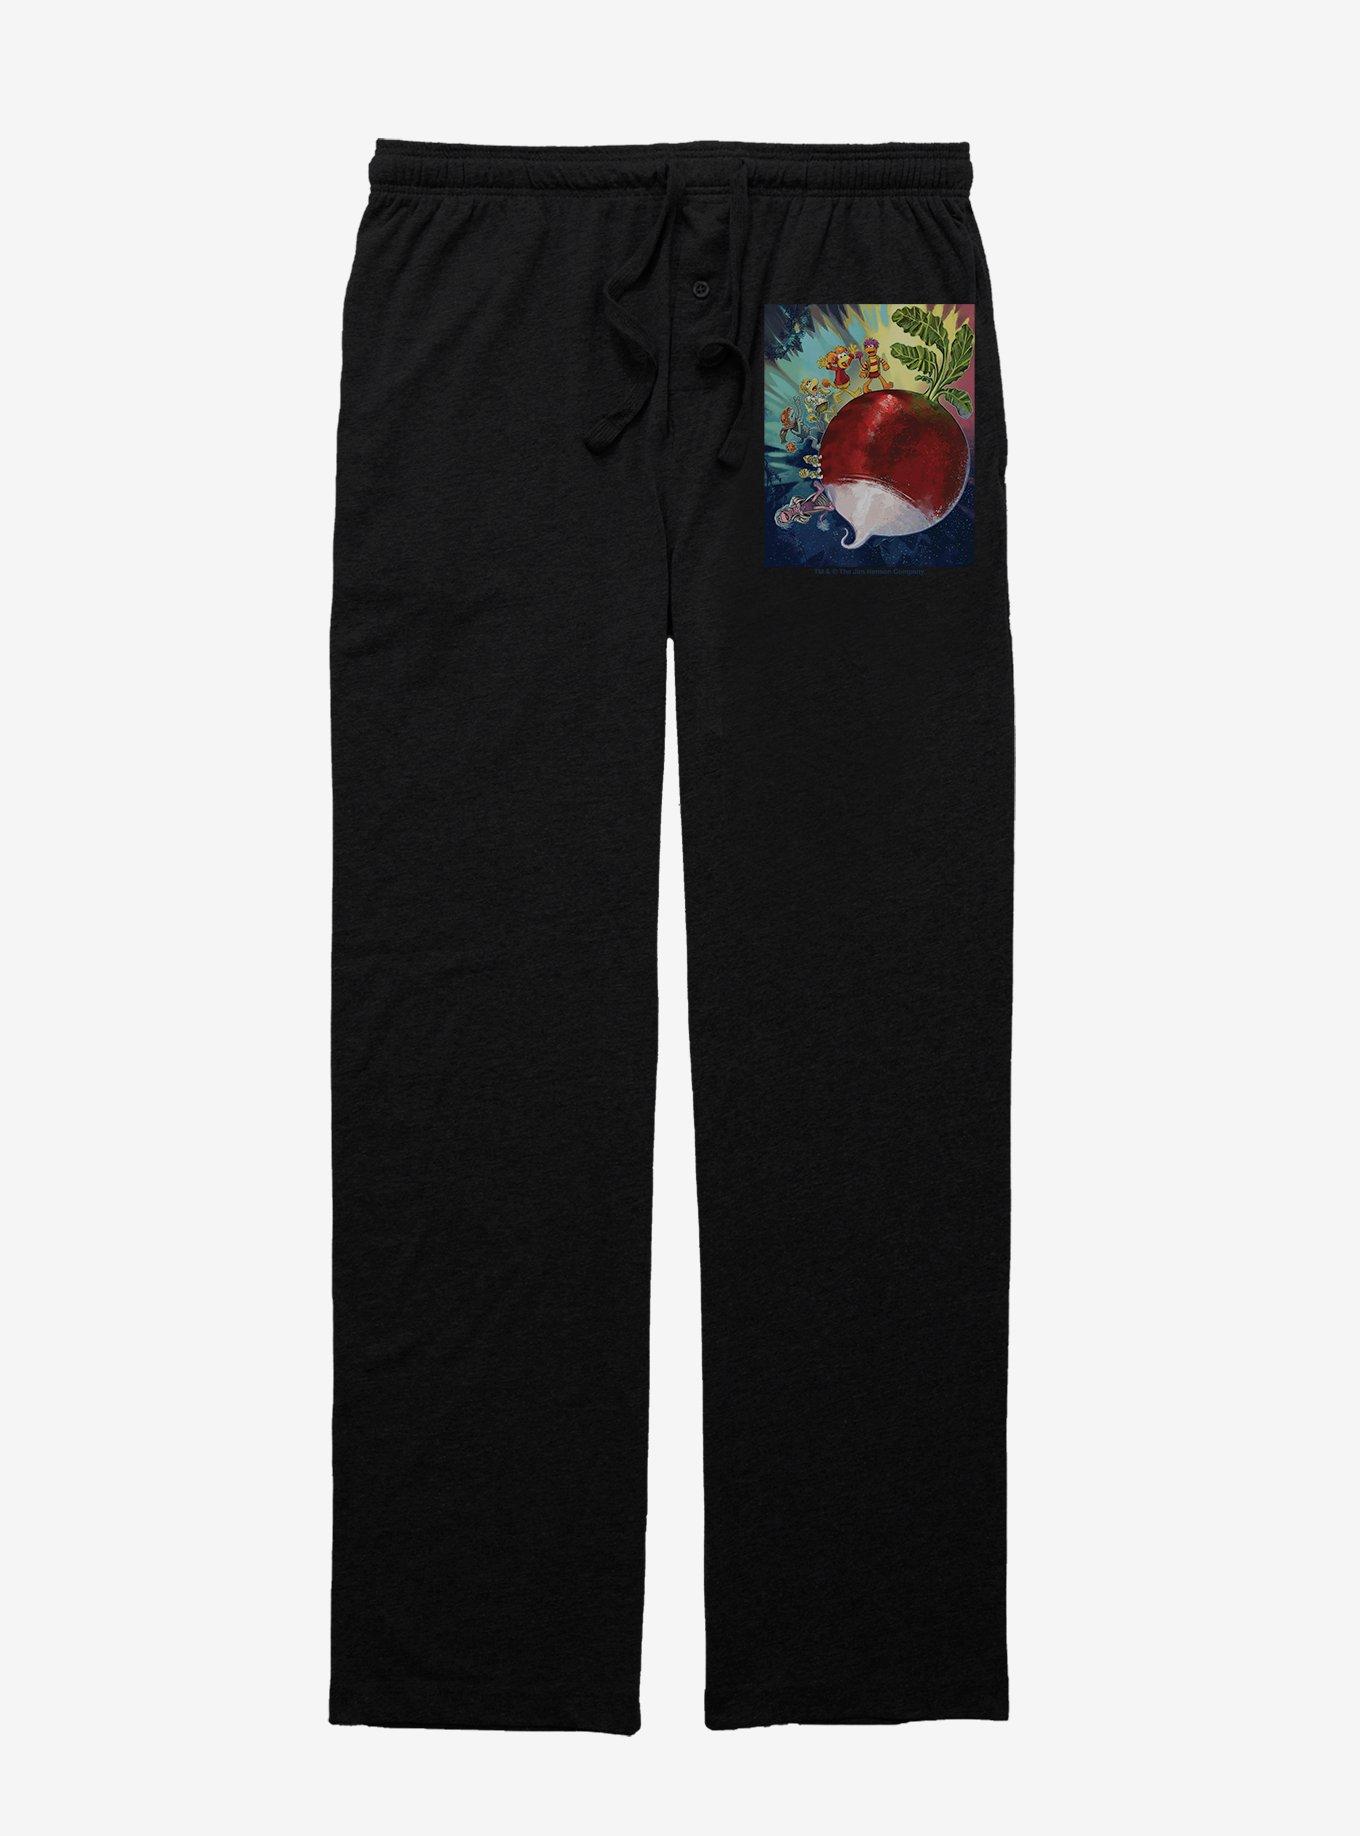 Jim Henson's Fraggle Rock All The Beets Pajama Pants, BLACK, hi-res